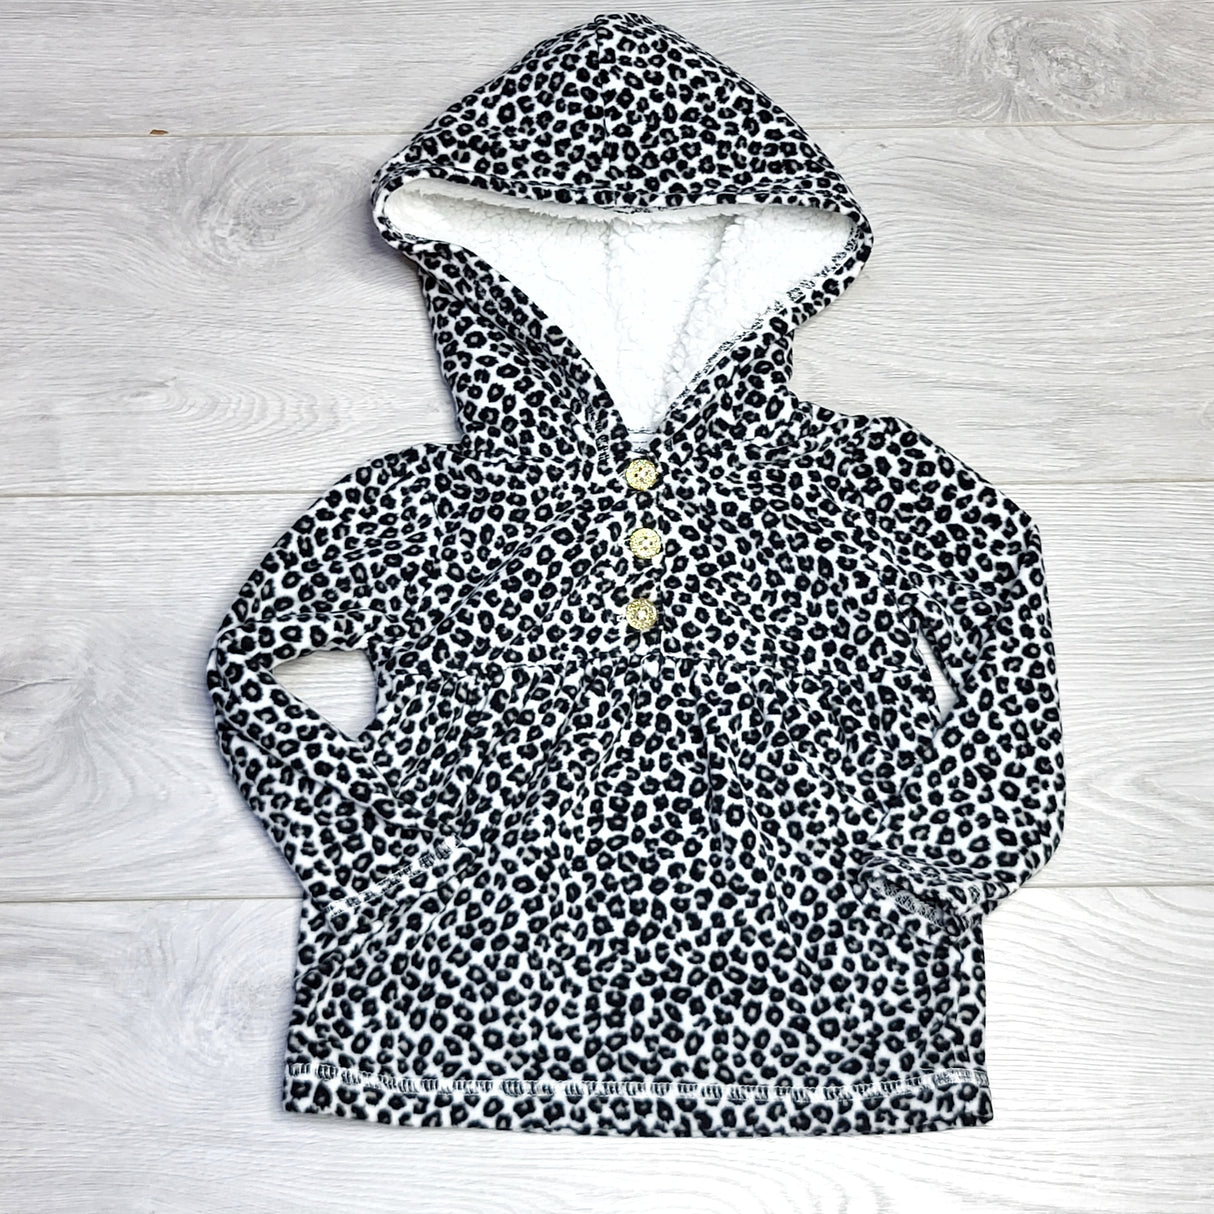 DCON22 - Carters leopard print pullover fleece hoodie, size 18 months